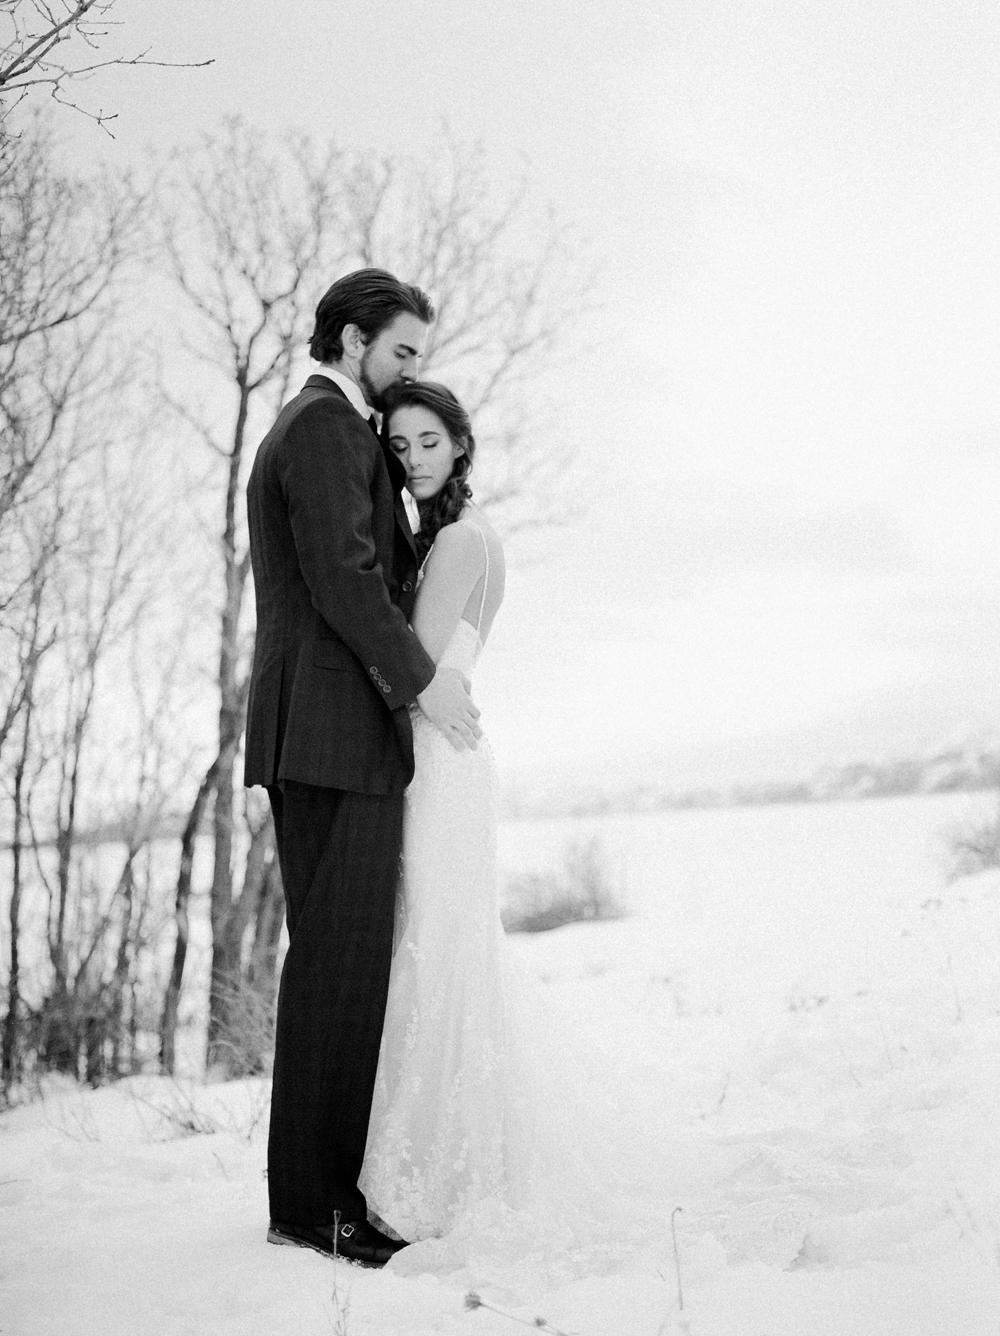 Christine-Gosch-Utah-film-photographer-wedding-mountains-snow-snowy-destination-6.jpg